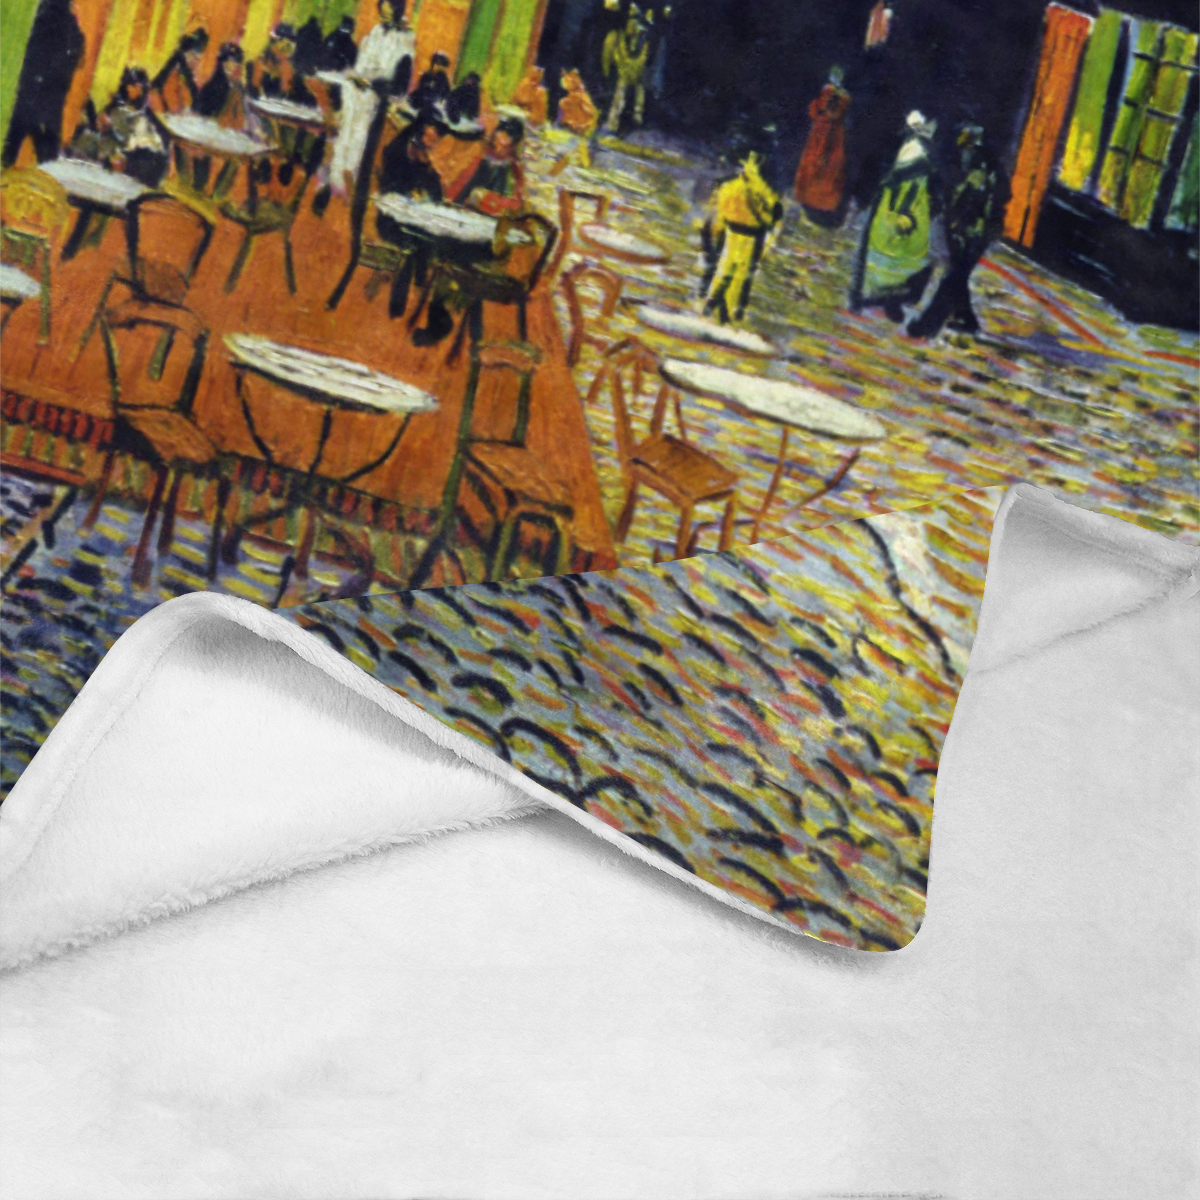 Vincent Willem van Gogh - Cafe Terrace at Night Ultra-Soft Micro Fleece Blanket 60"x80"